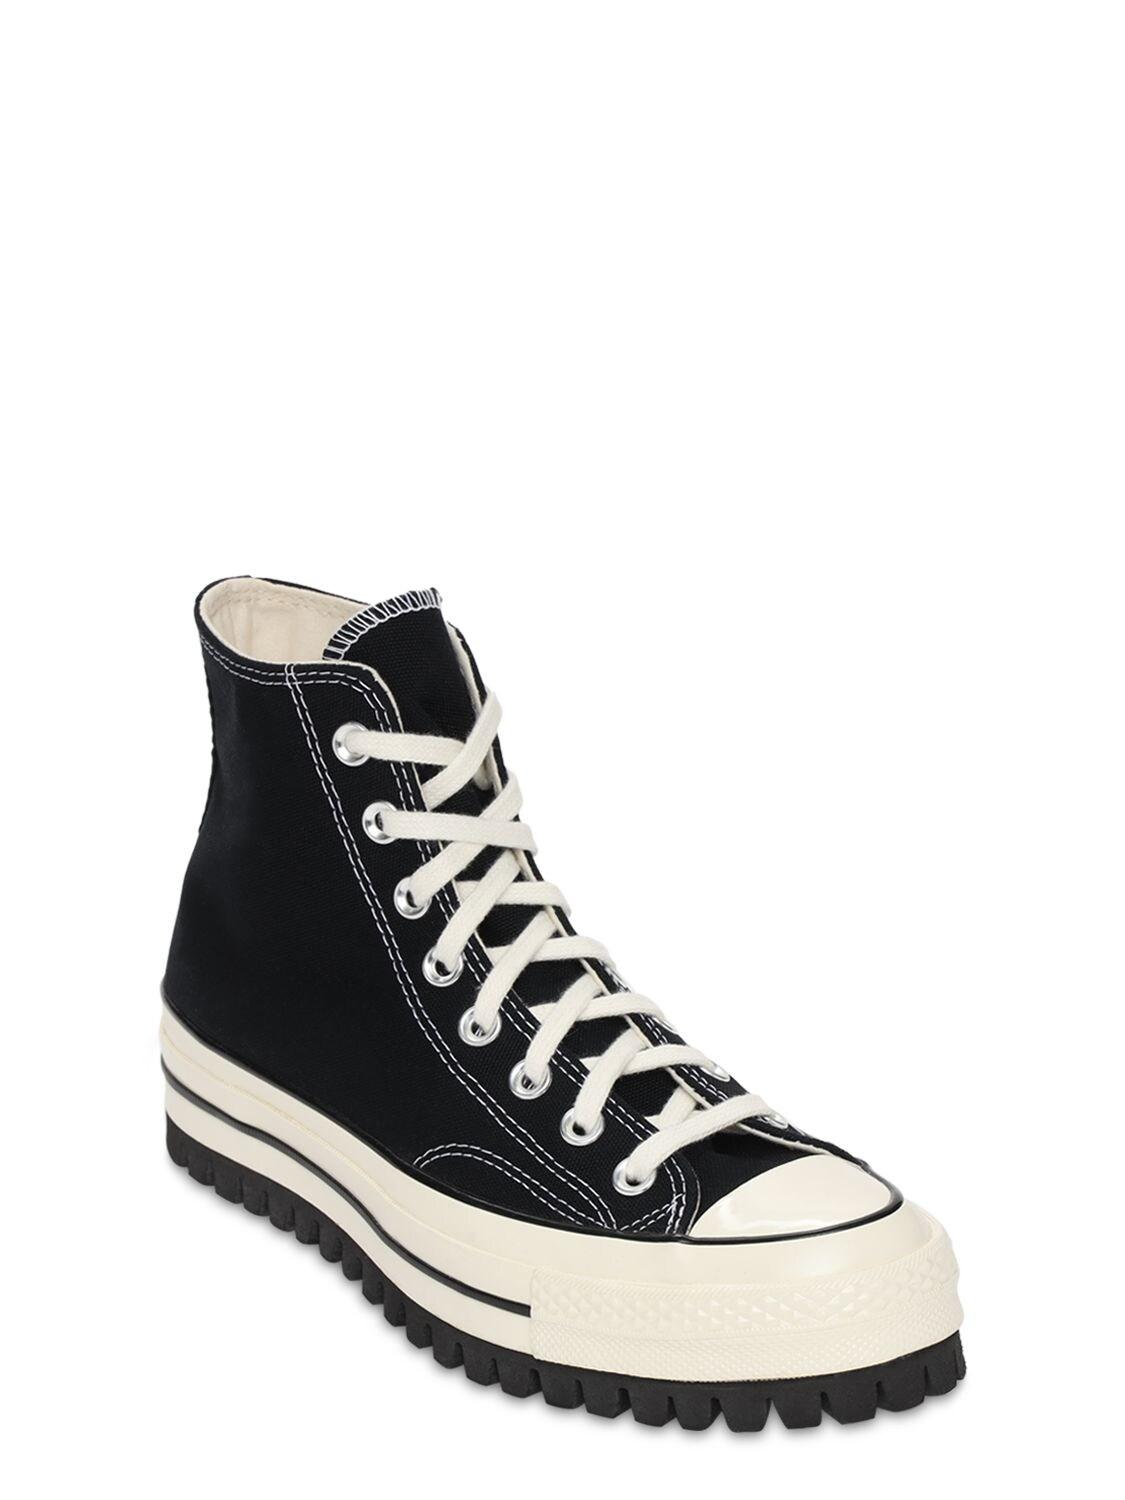 Converse Chuck 70 Trek Ltd Hi Sneakers in Black | Lyst